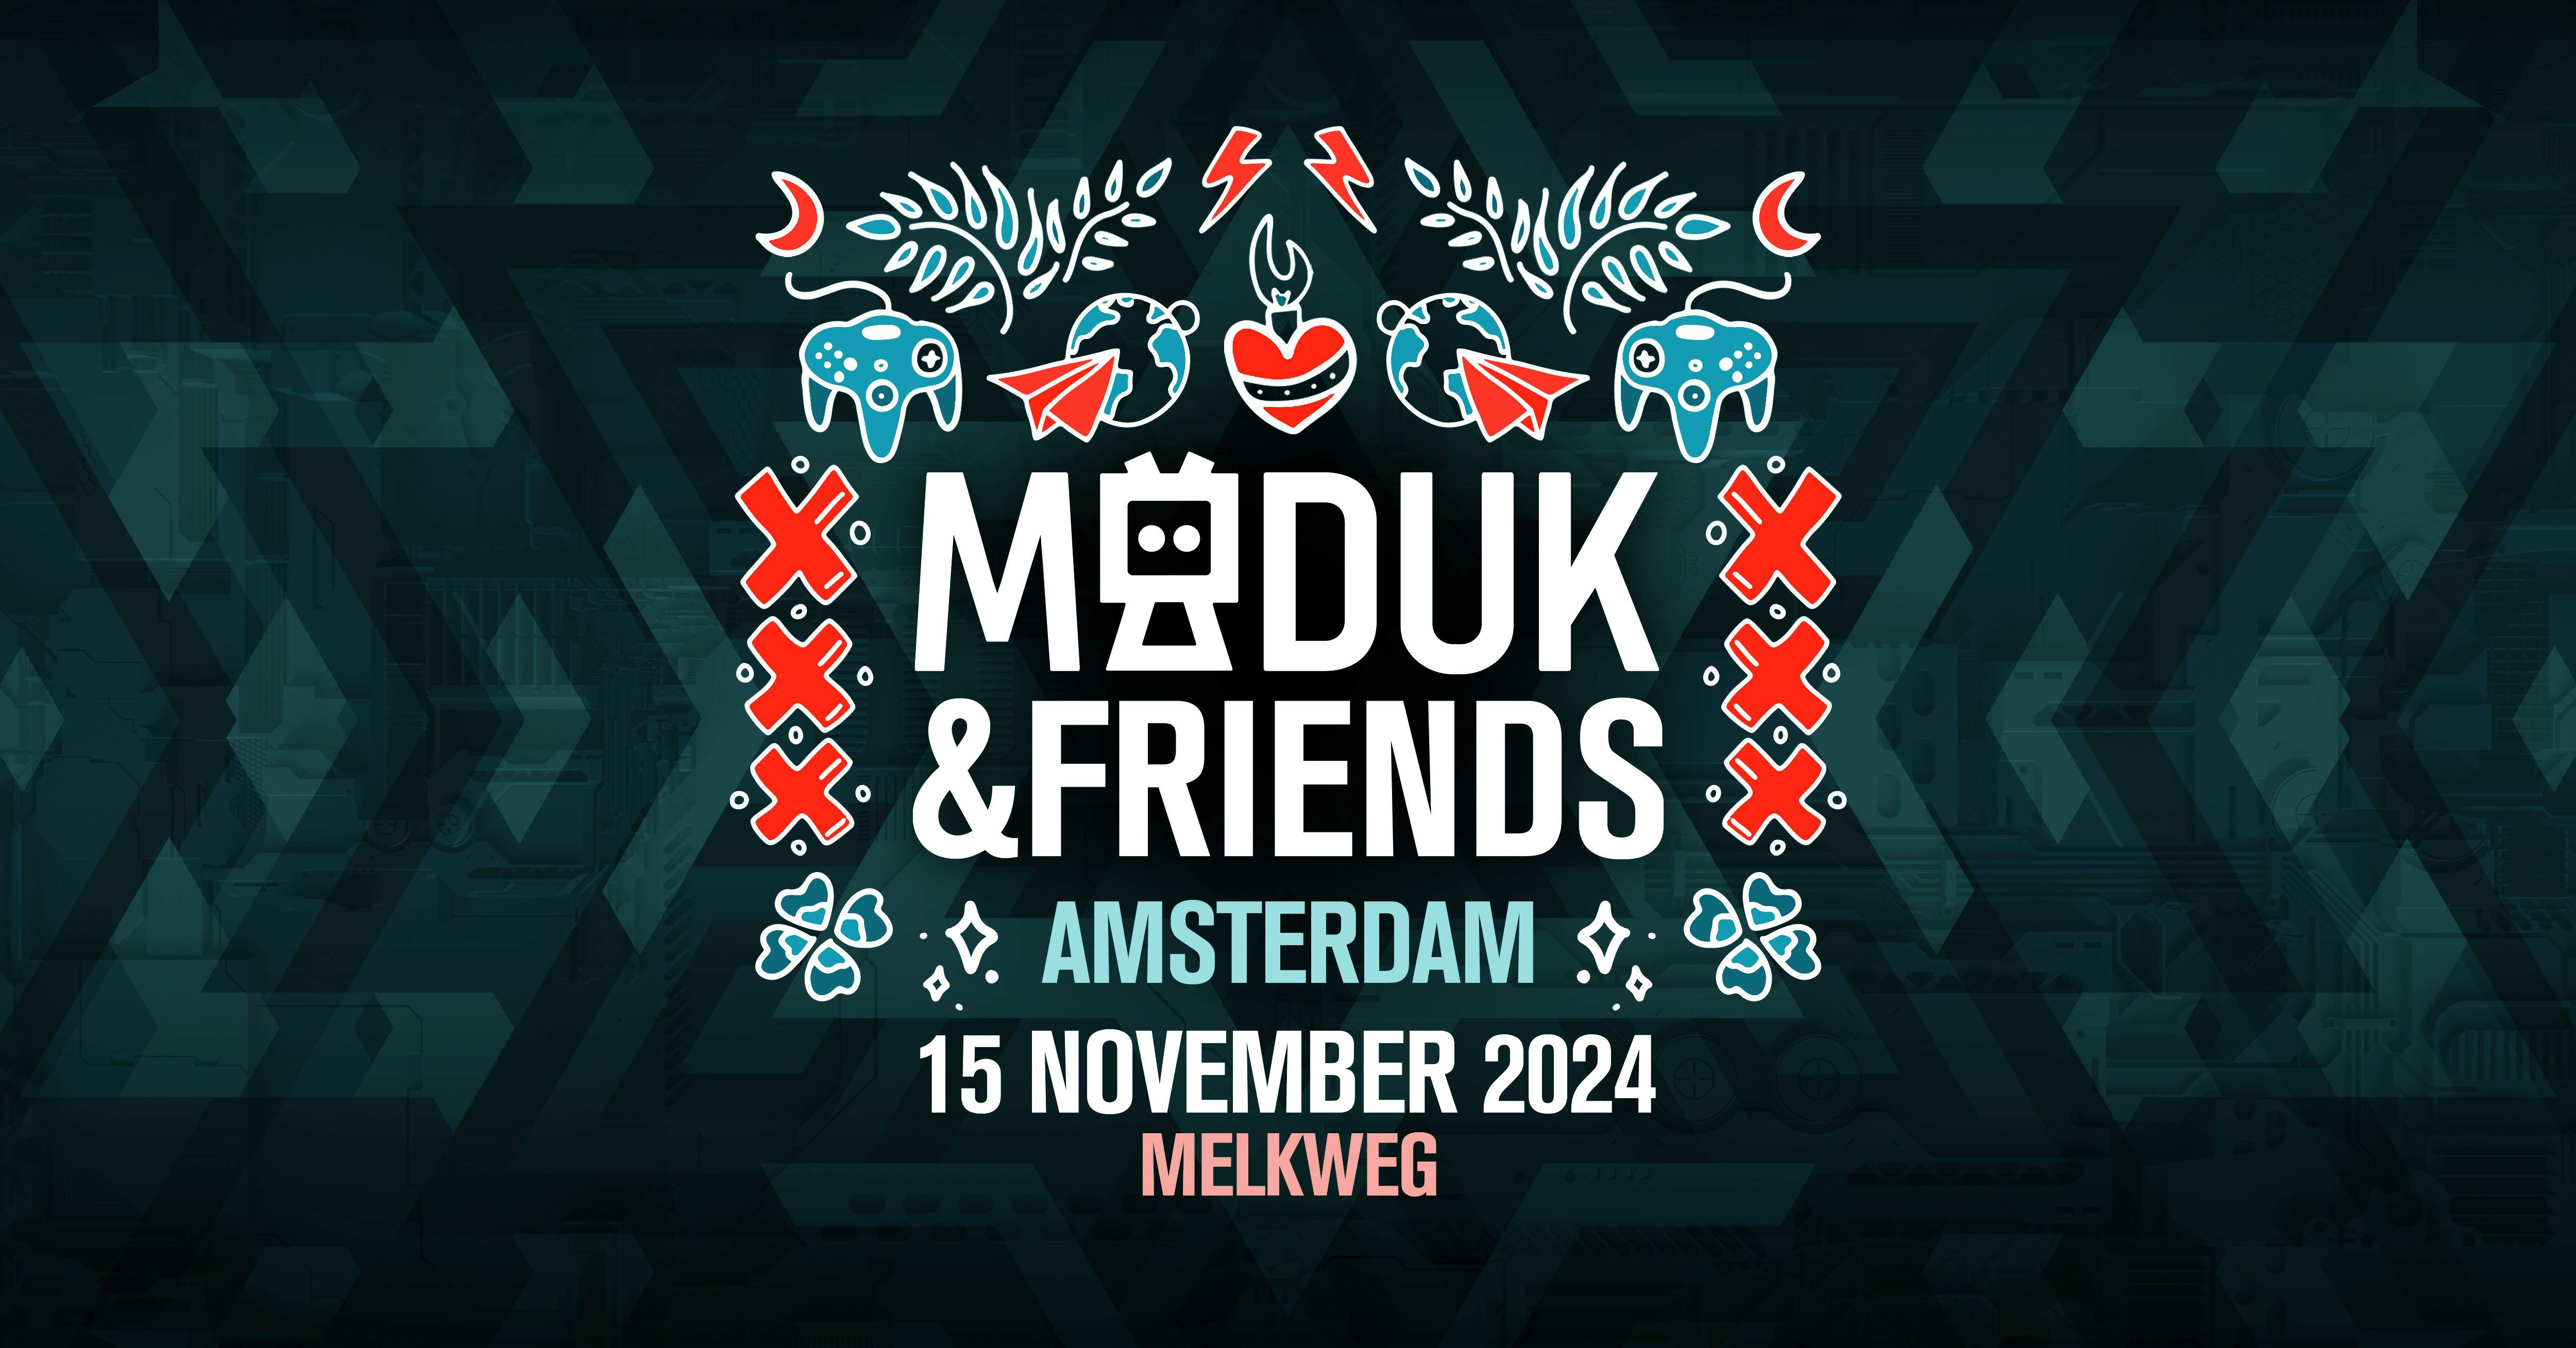 Maduk & Friends Amsterdam 2024 - フライヤー表